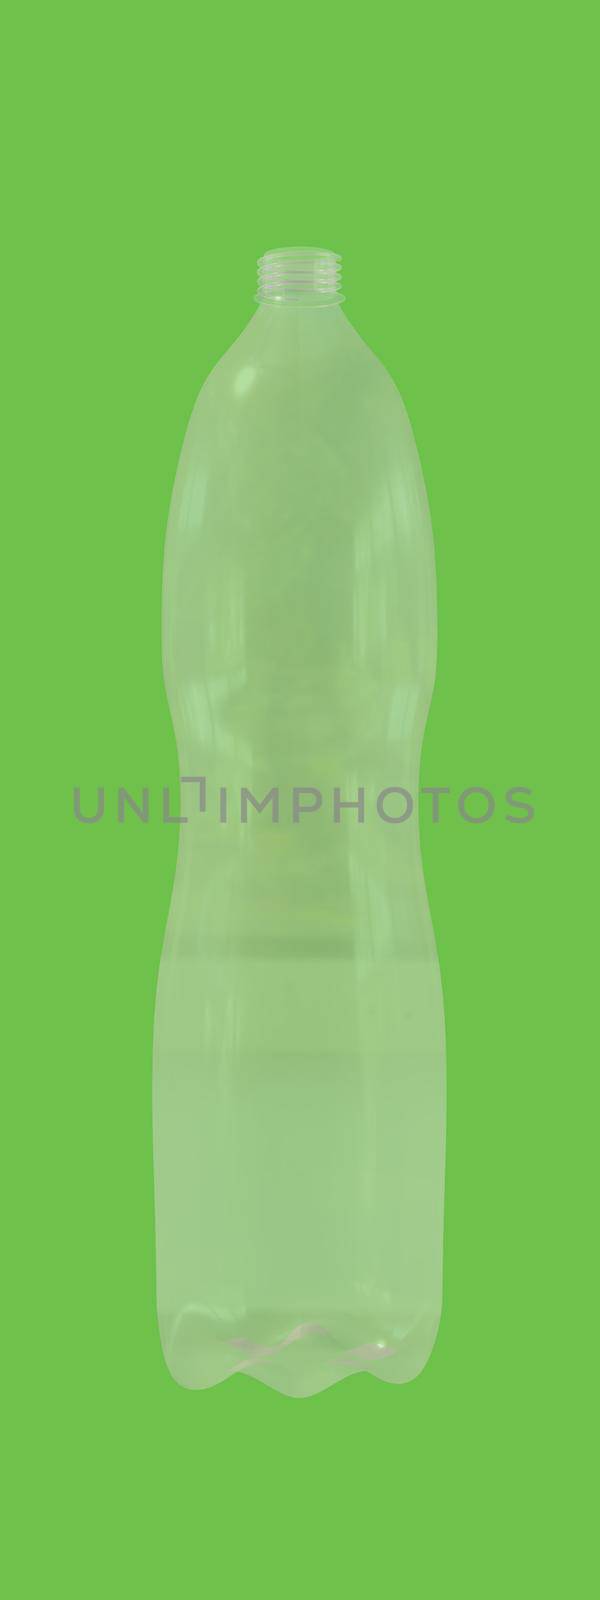 New, clean, empty plastic bottle on green background 3d render illustration